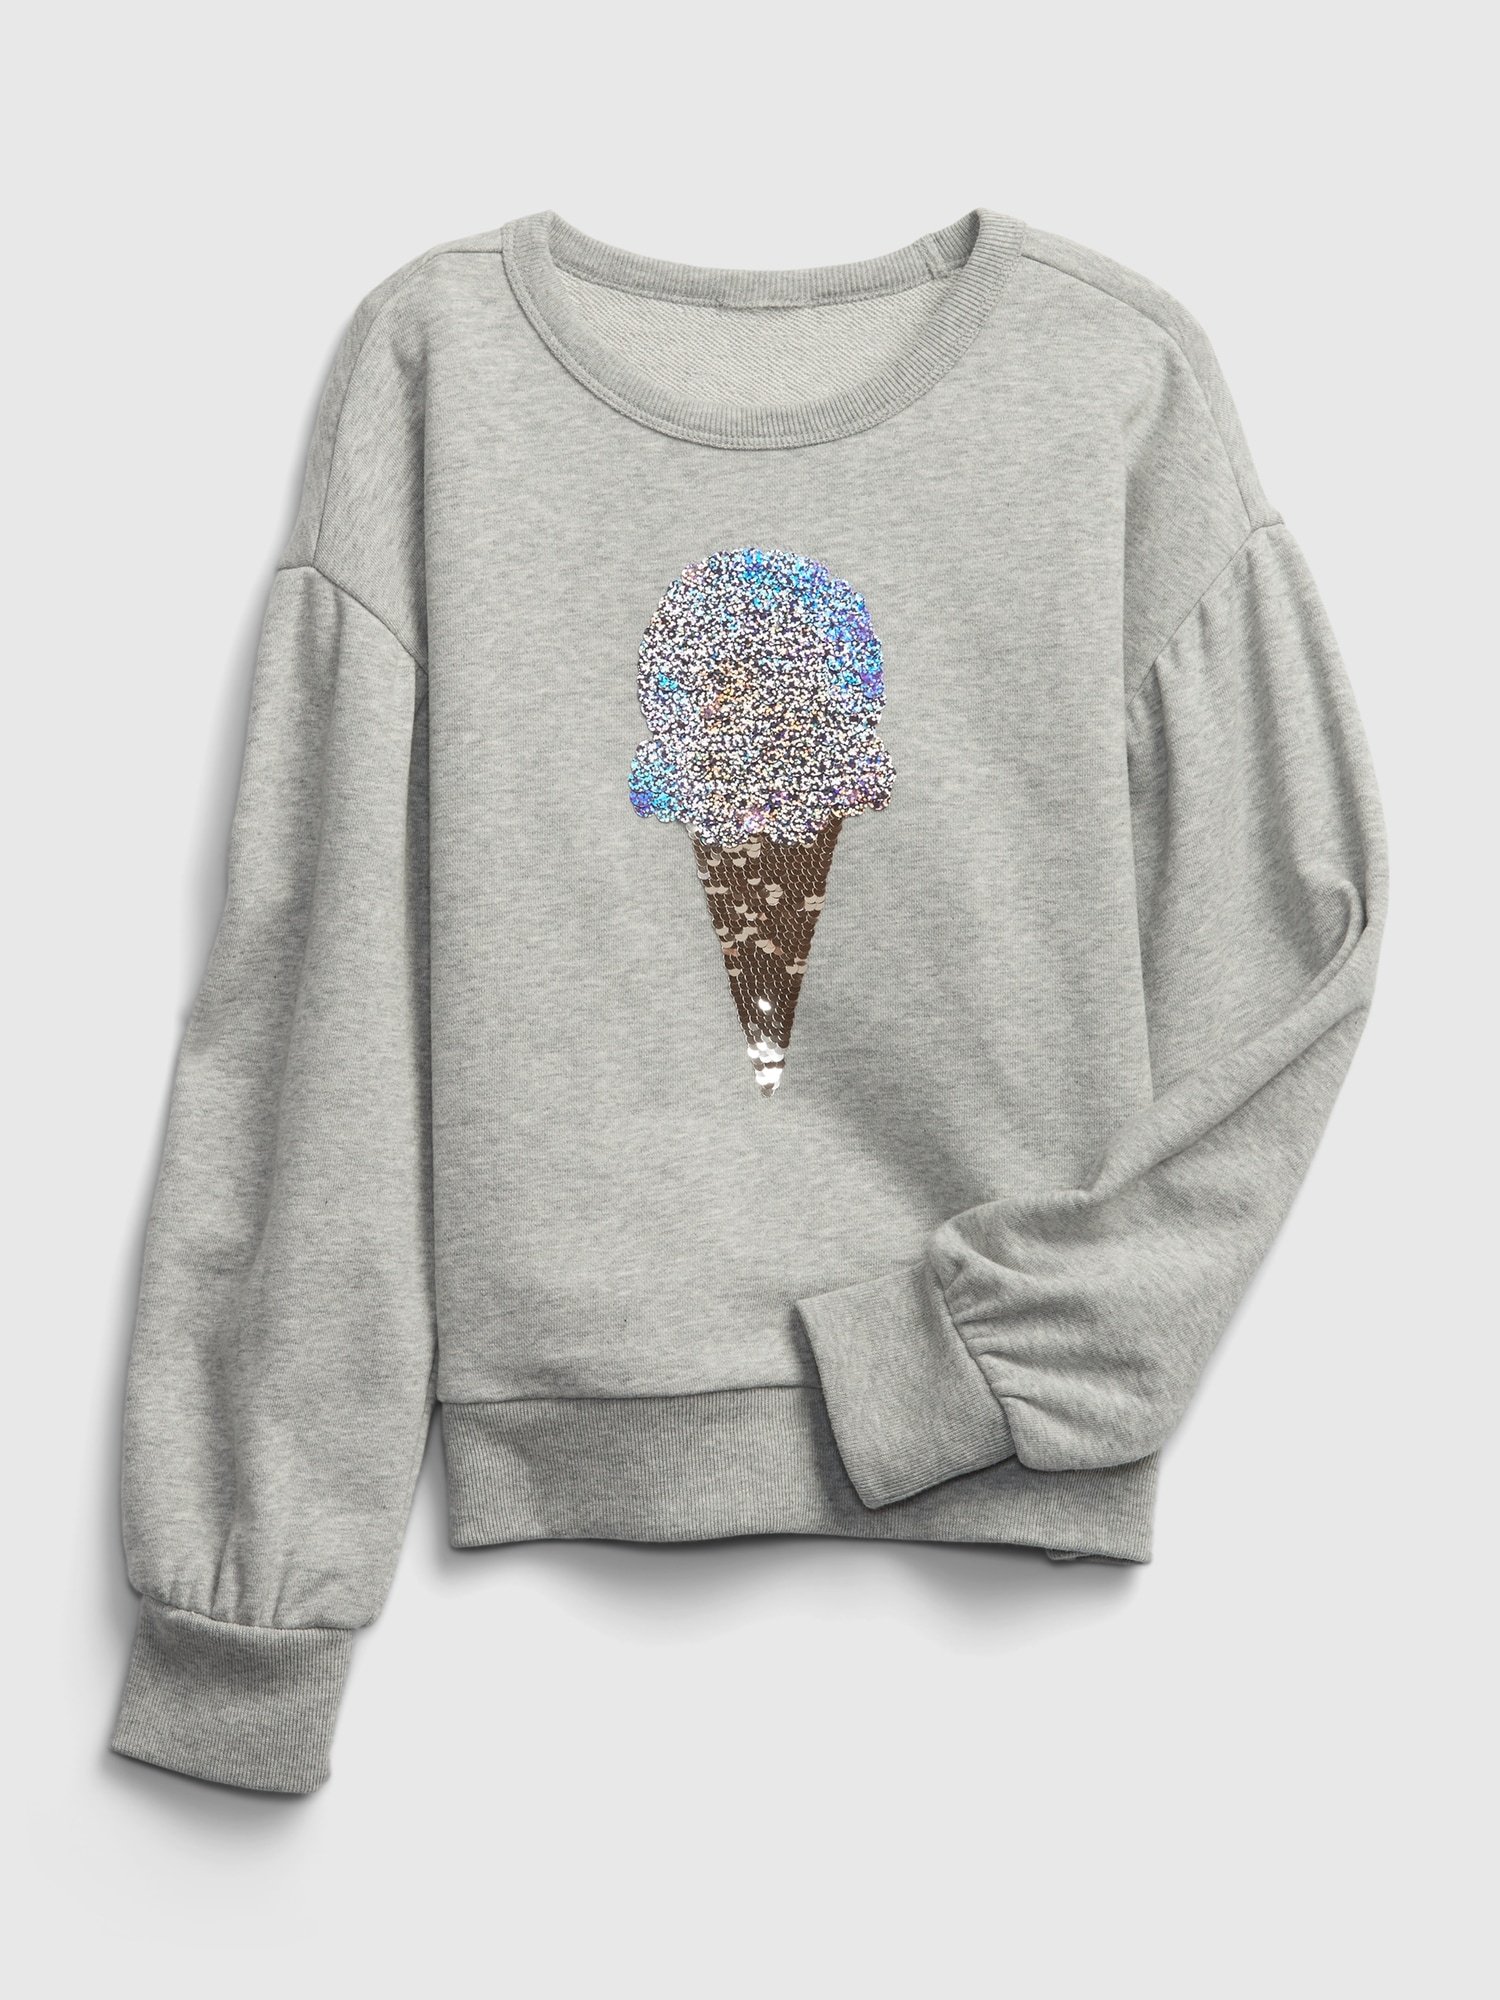 Dondurma Baskılı Sweatshirt product image